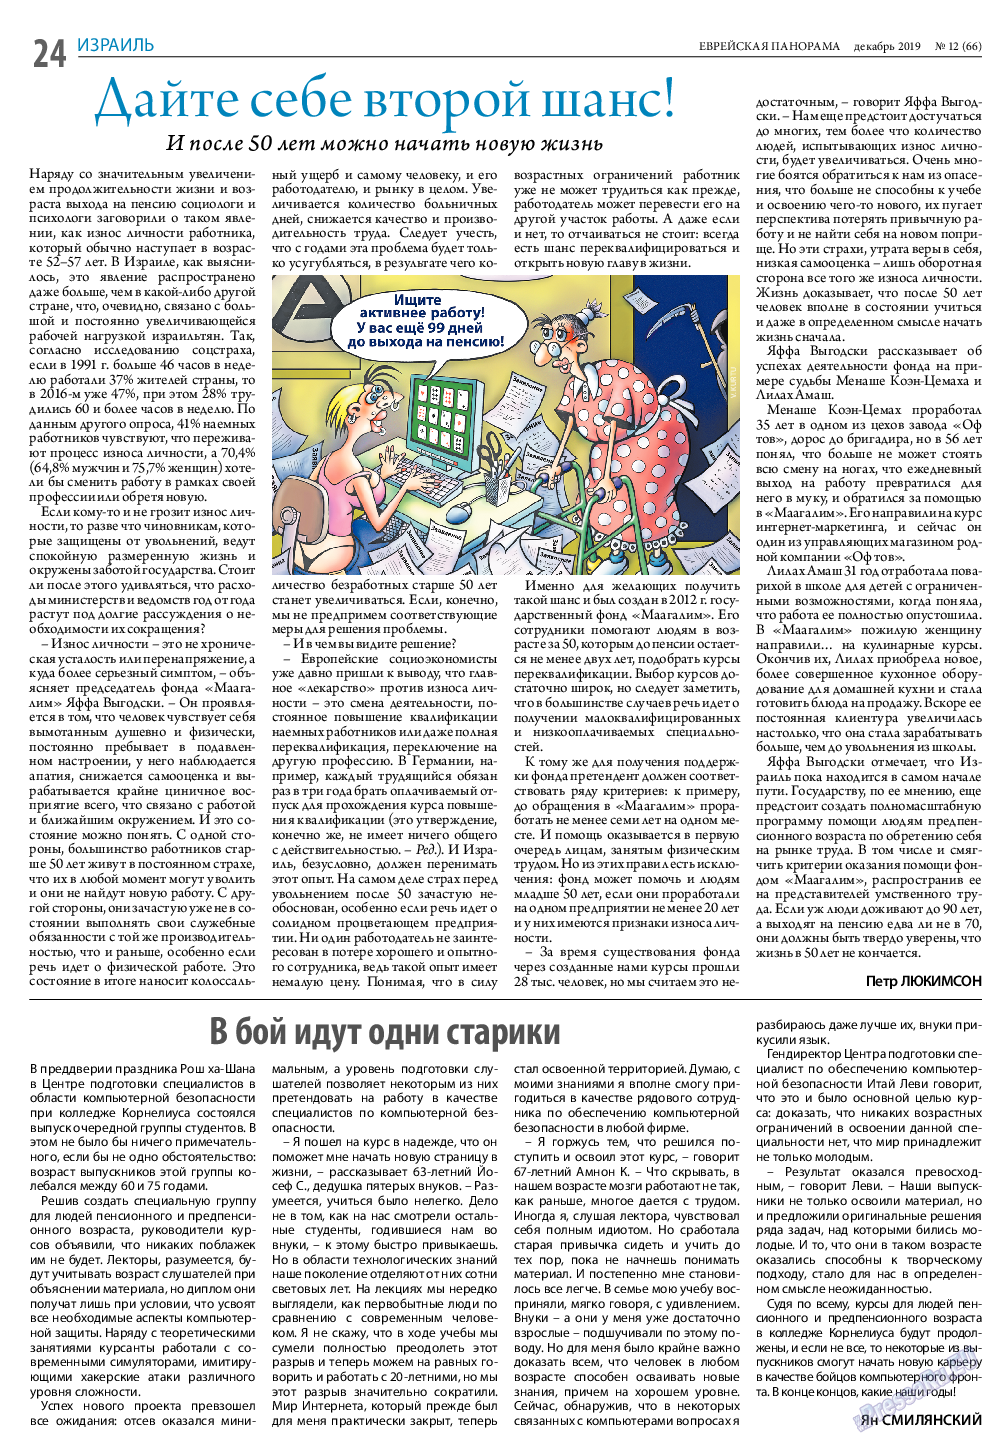 Еврейская панорама, газета. 2019 №12 стр.24